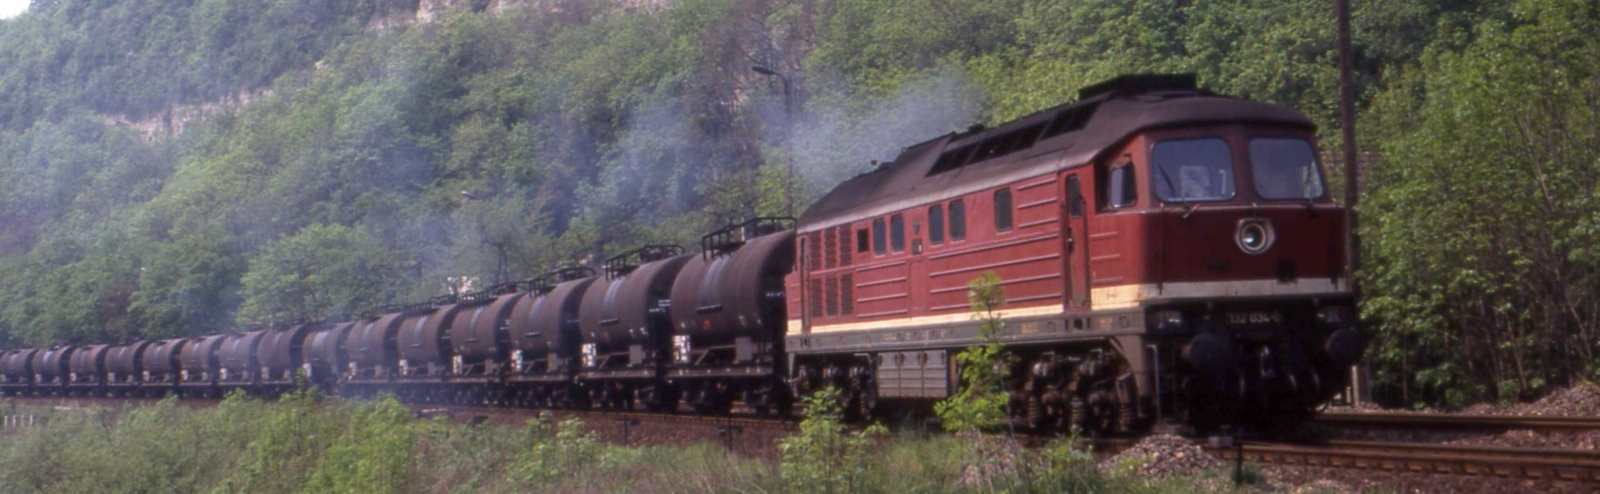 132 034-0 with an oil train in May 1990 near Dornburg/Saale